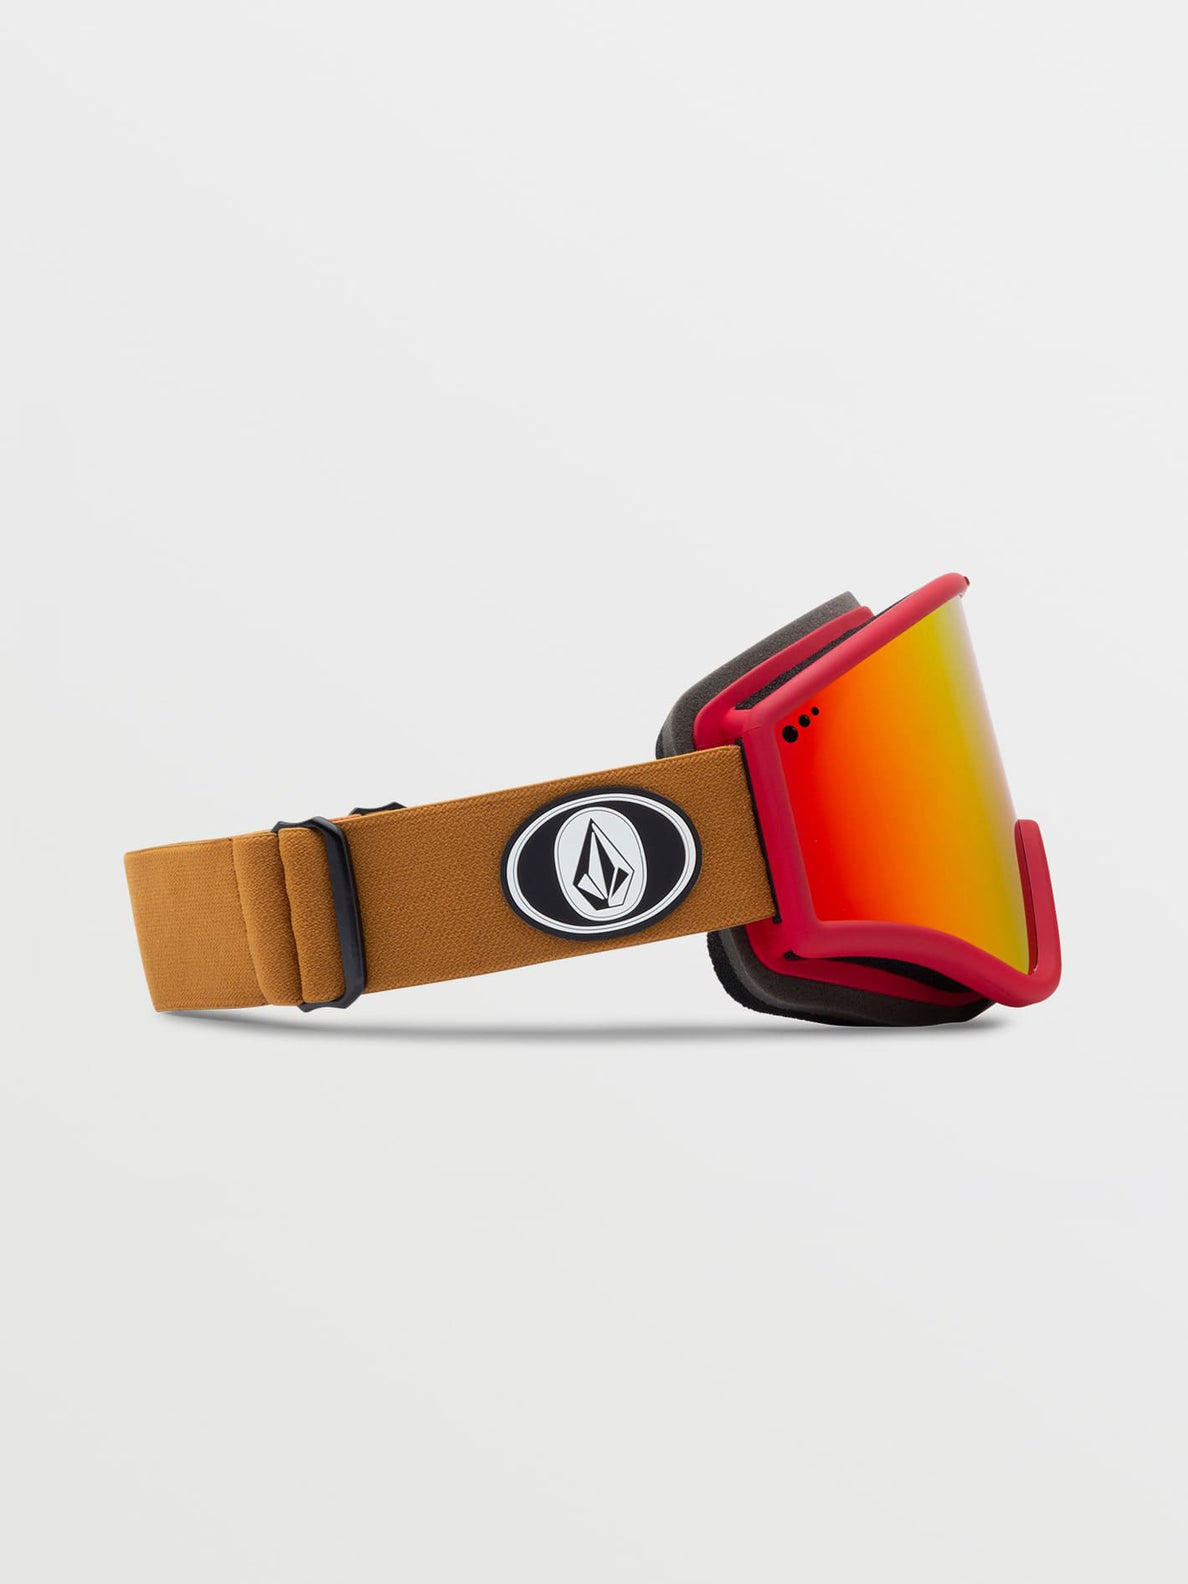 Yae Goggle with Bonus Lens - Charamel / Red Chrome